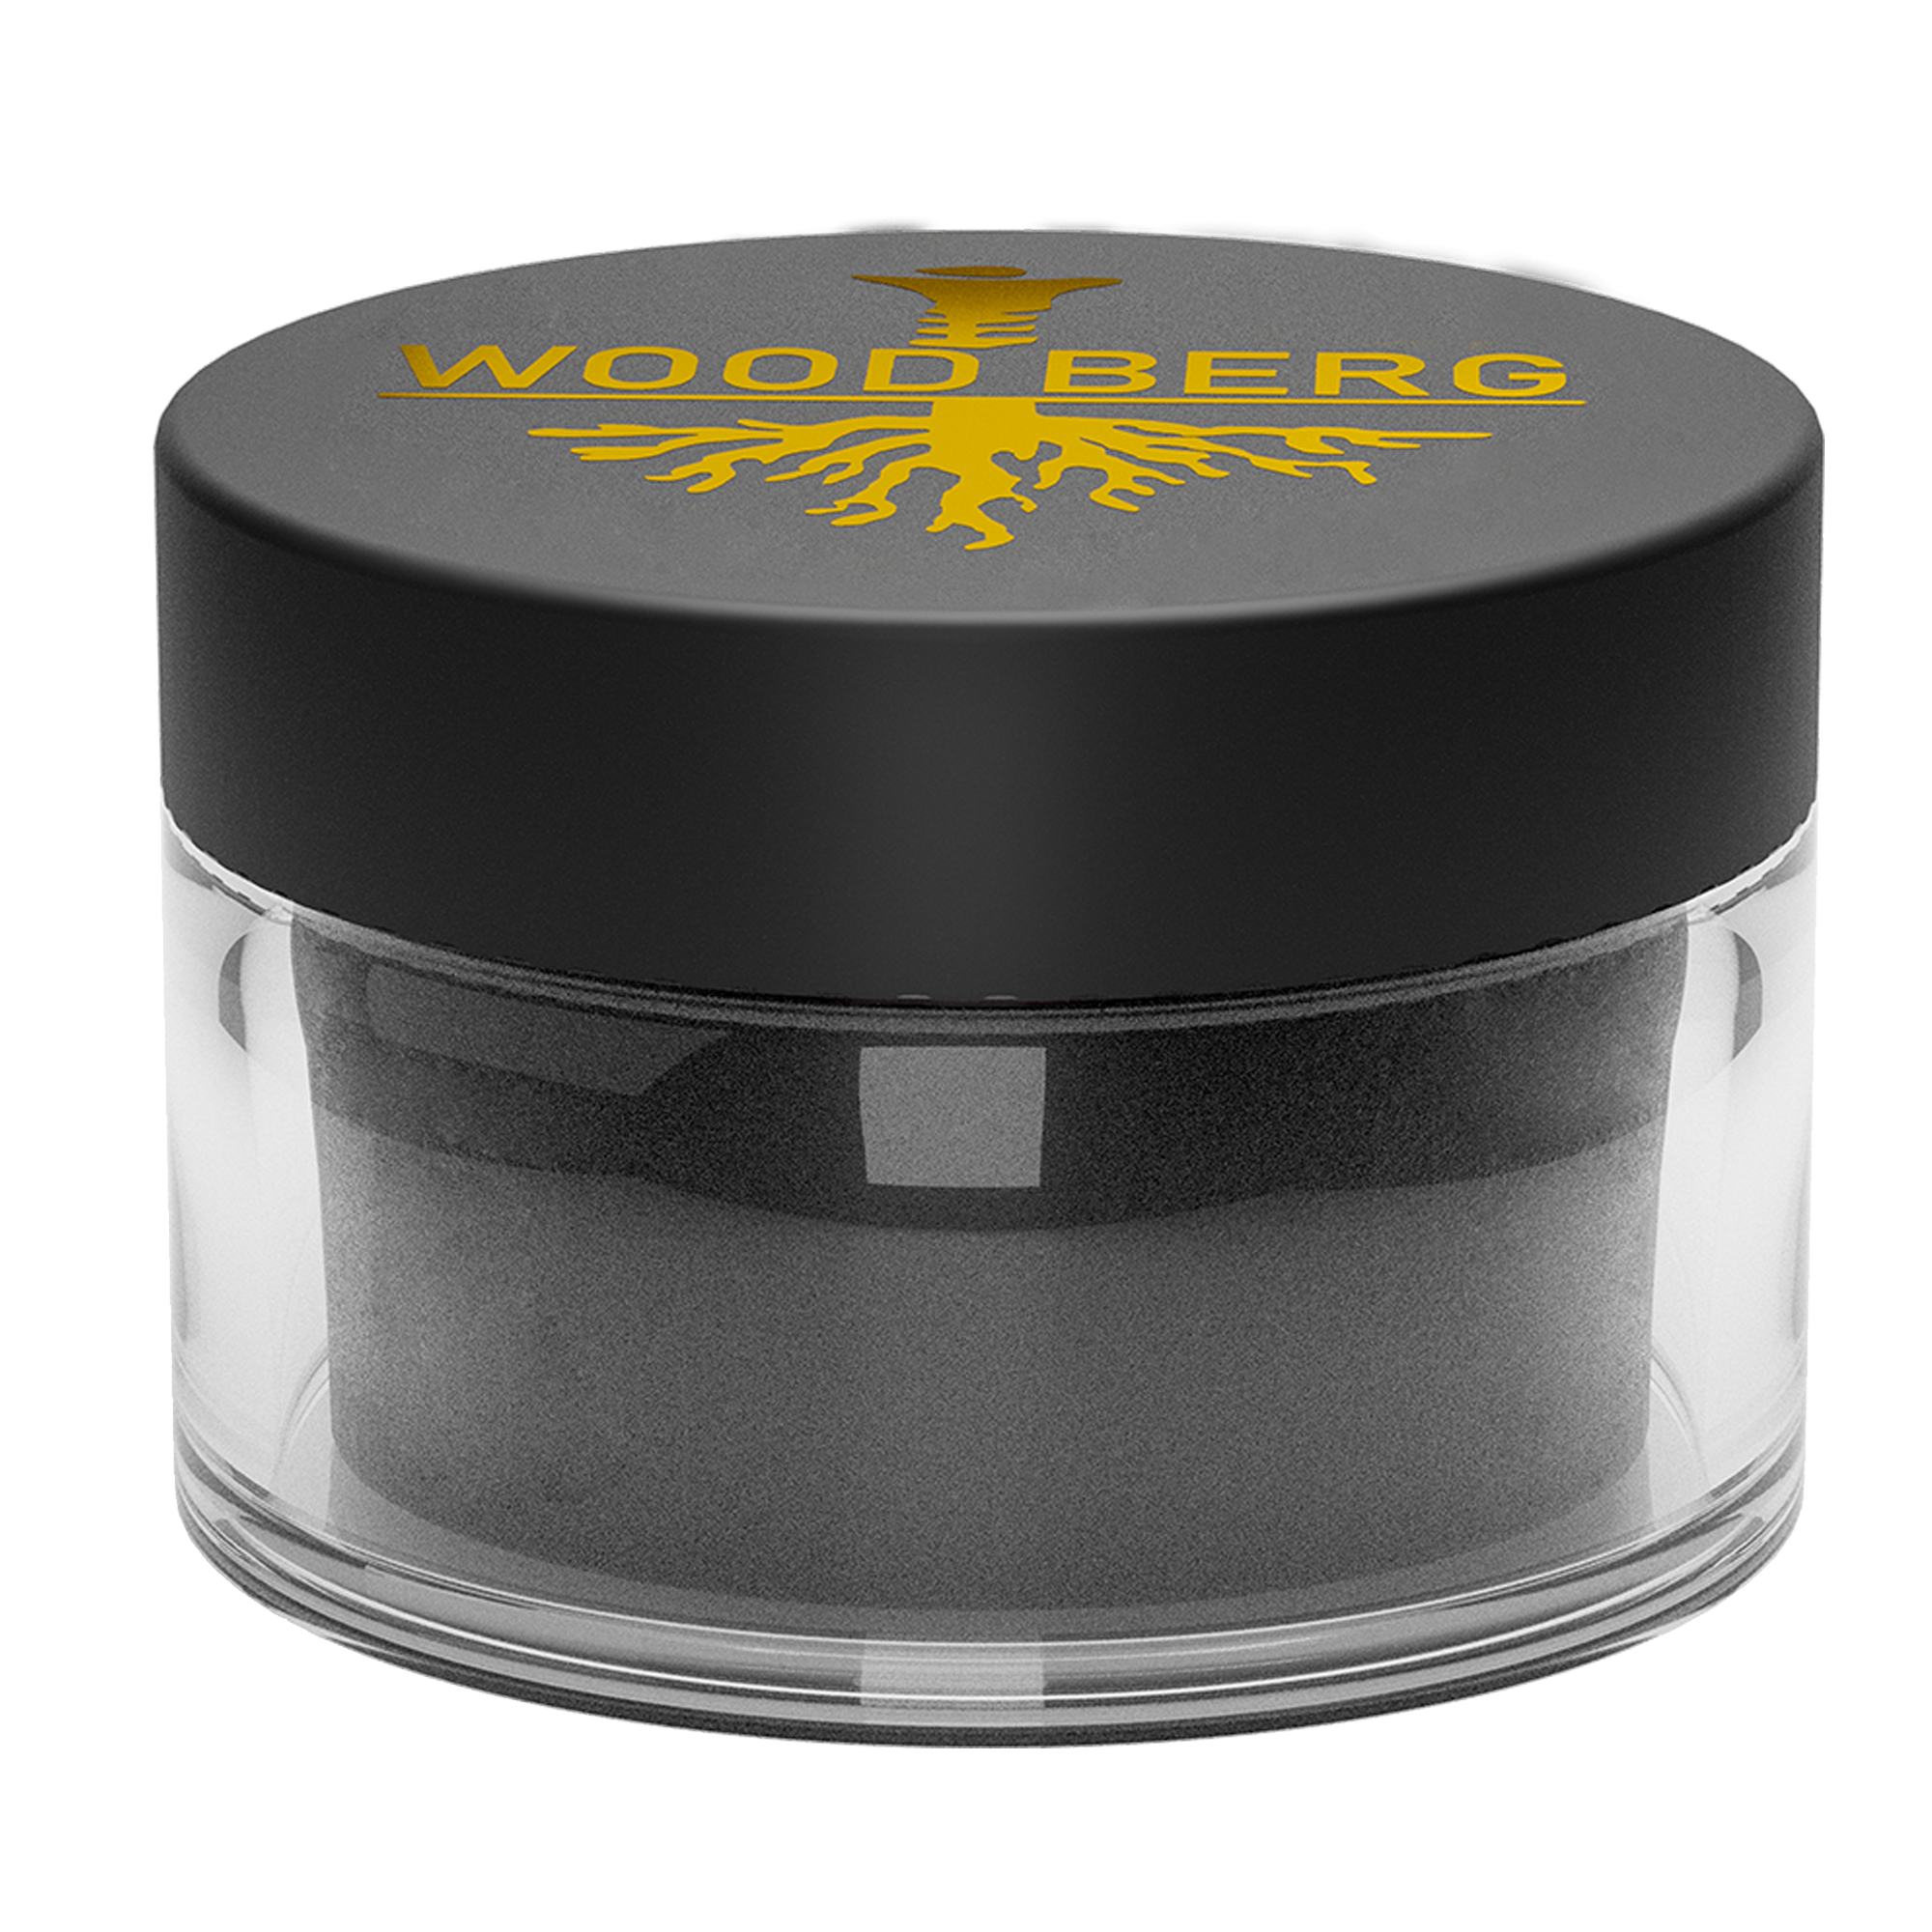 Woodberg - لون مايكا اسود فحمي 15 غرام 